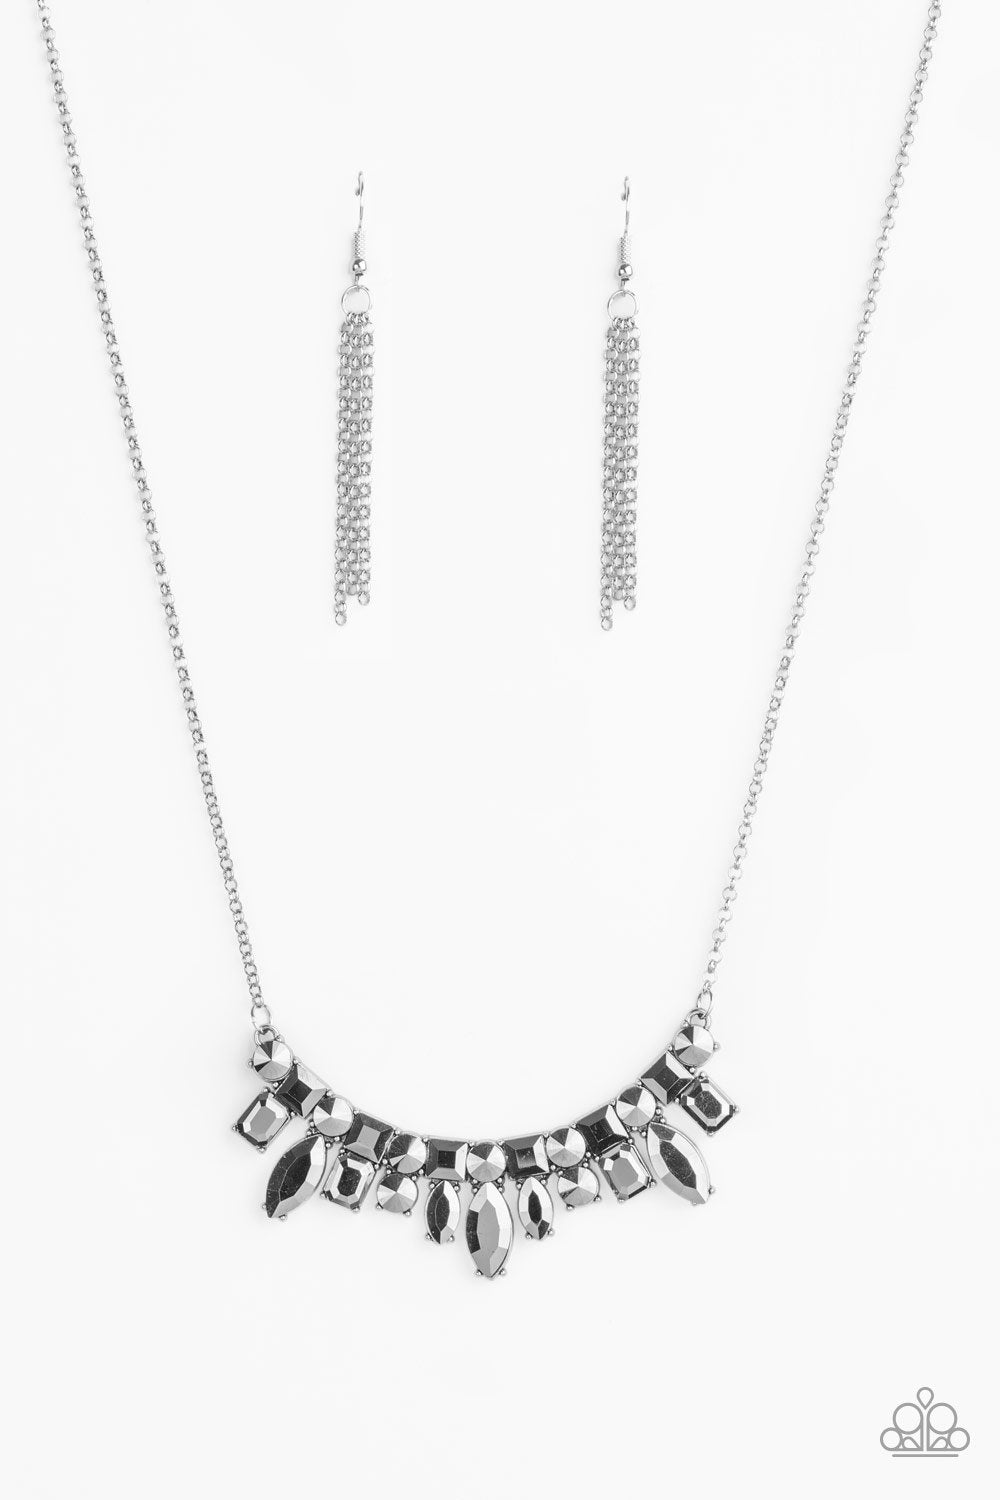 Wish Upon A ROCKSTAR Silver Hematite Rhinestone Necklace - Paparazzi Accessories - lightbox -CarasShop.com - $5 Jewelry by Cara Jewels